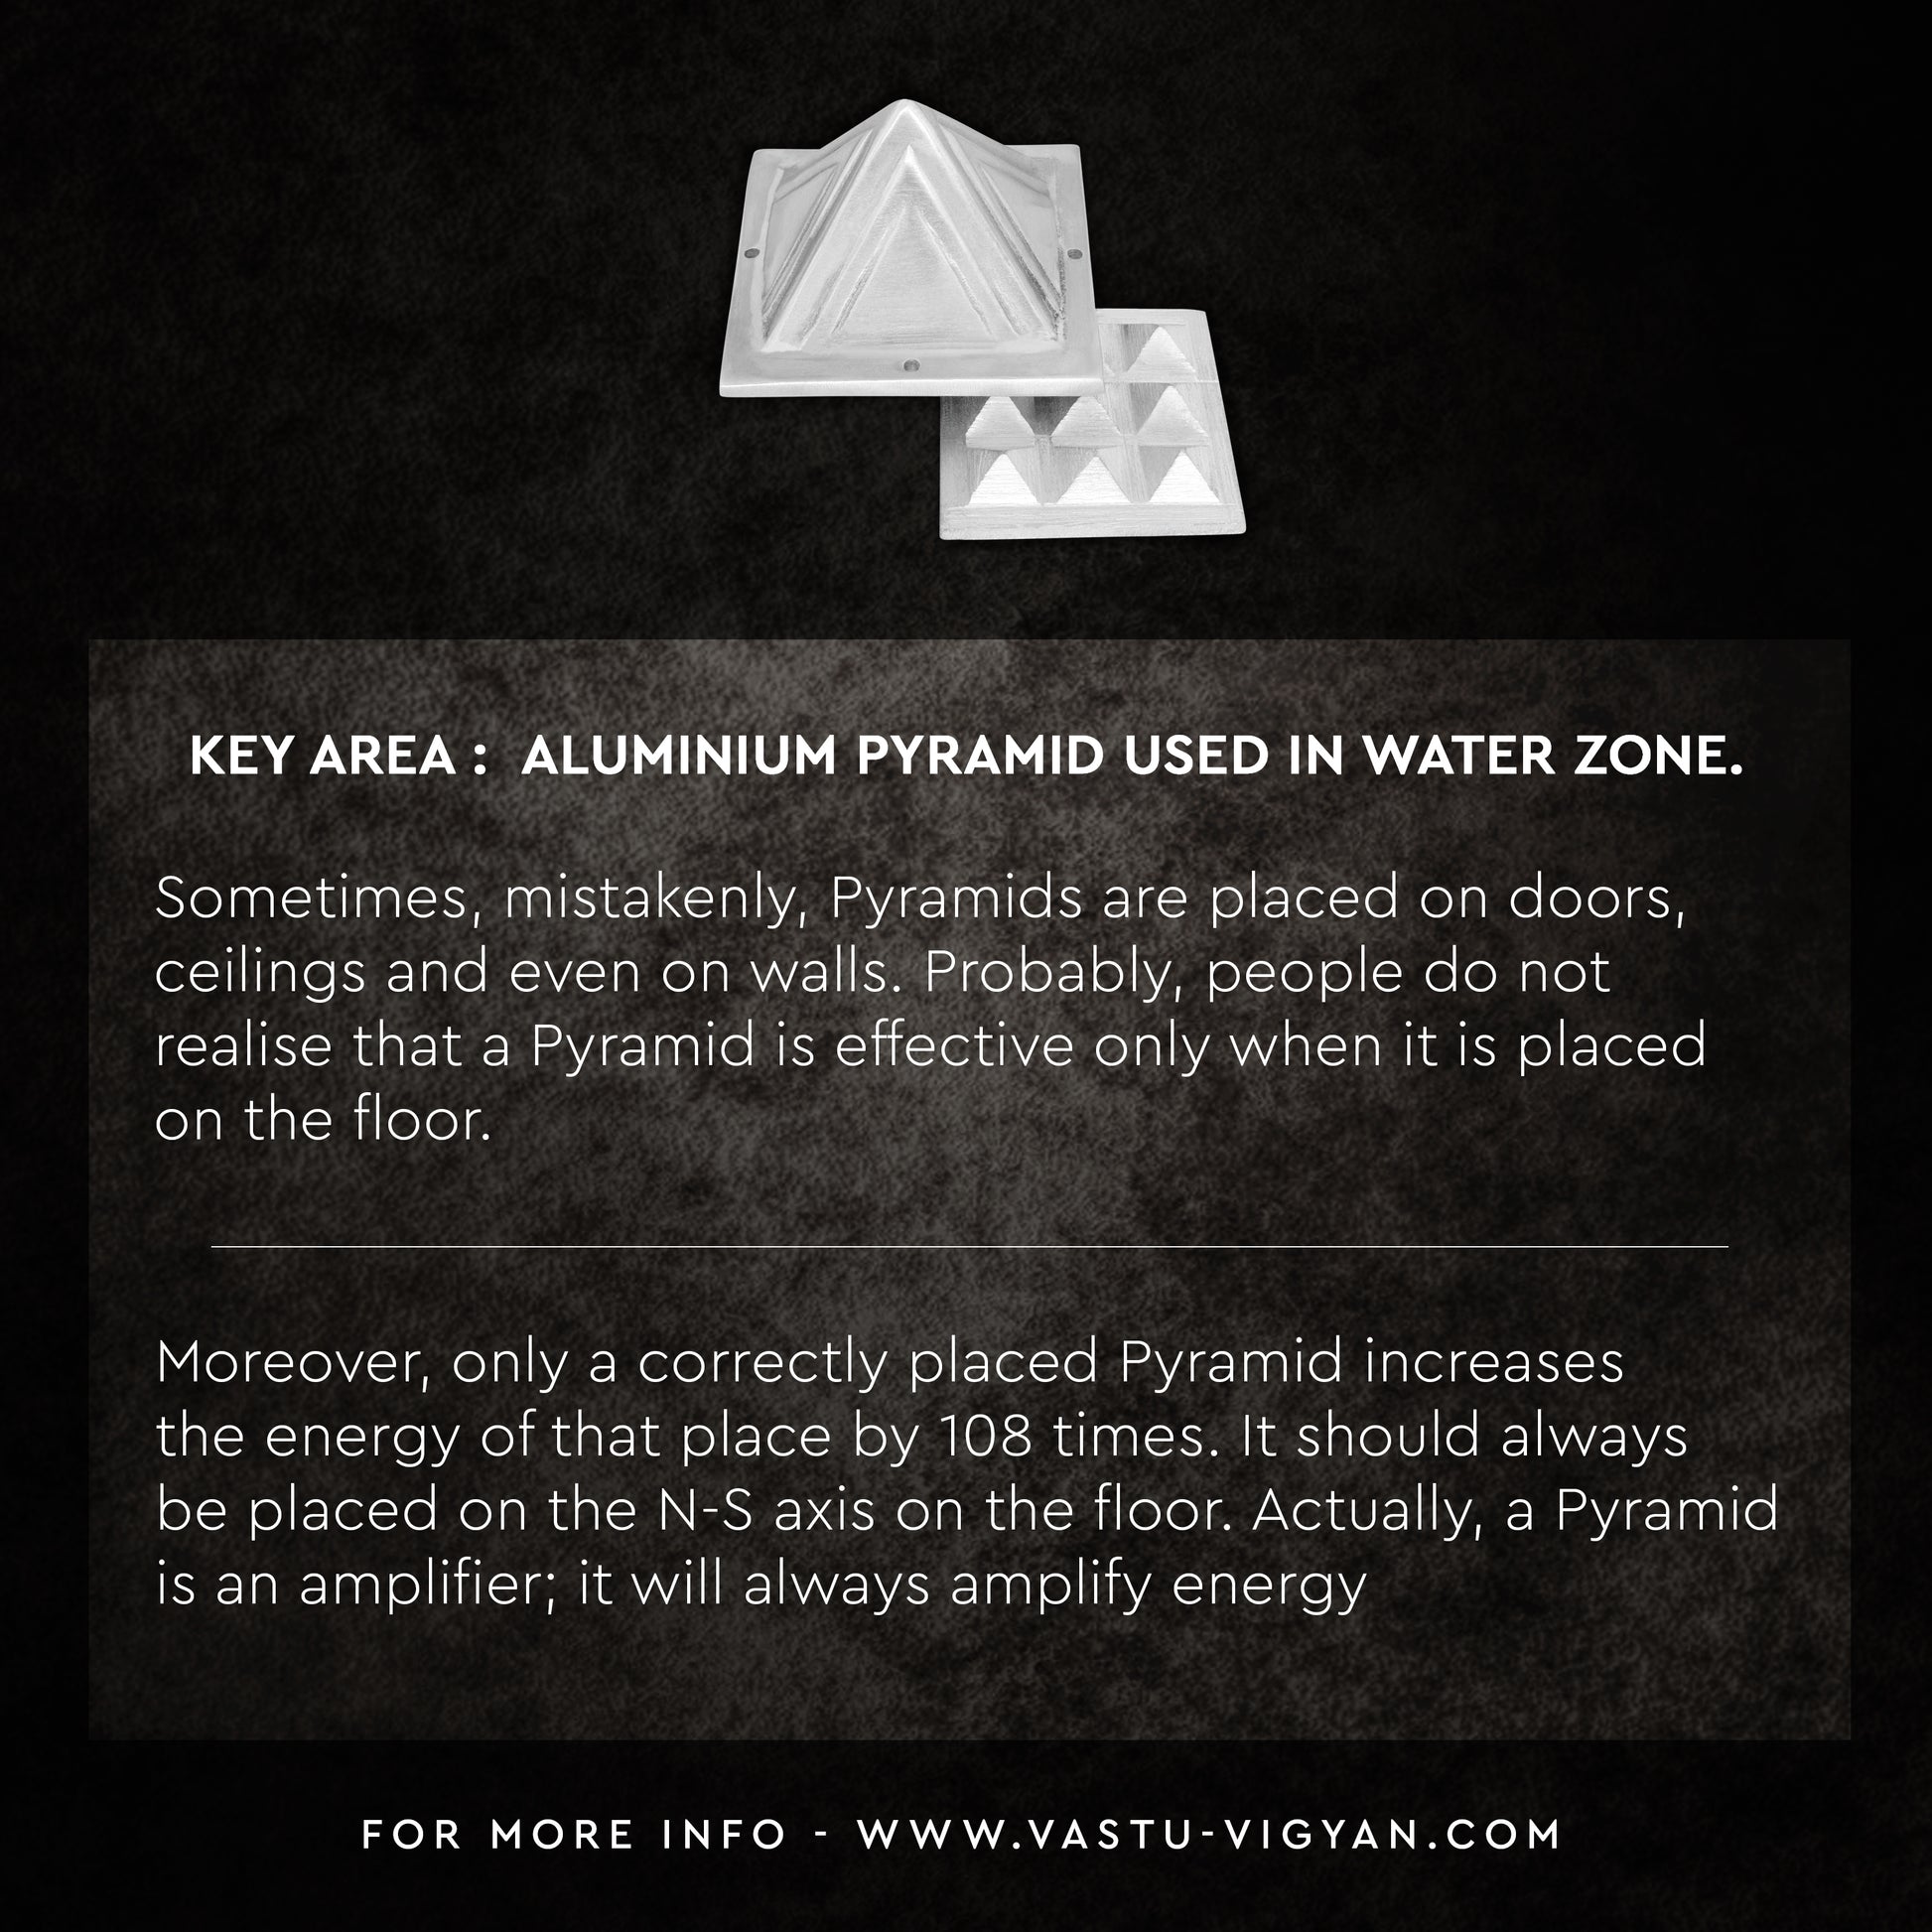 aluminium pyramid